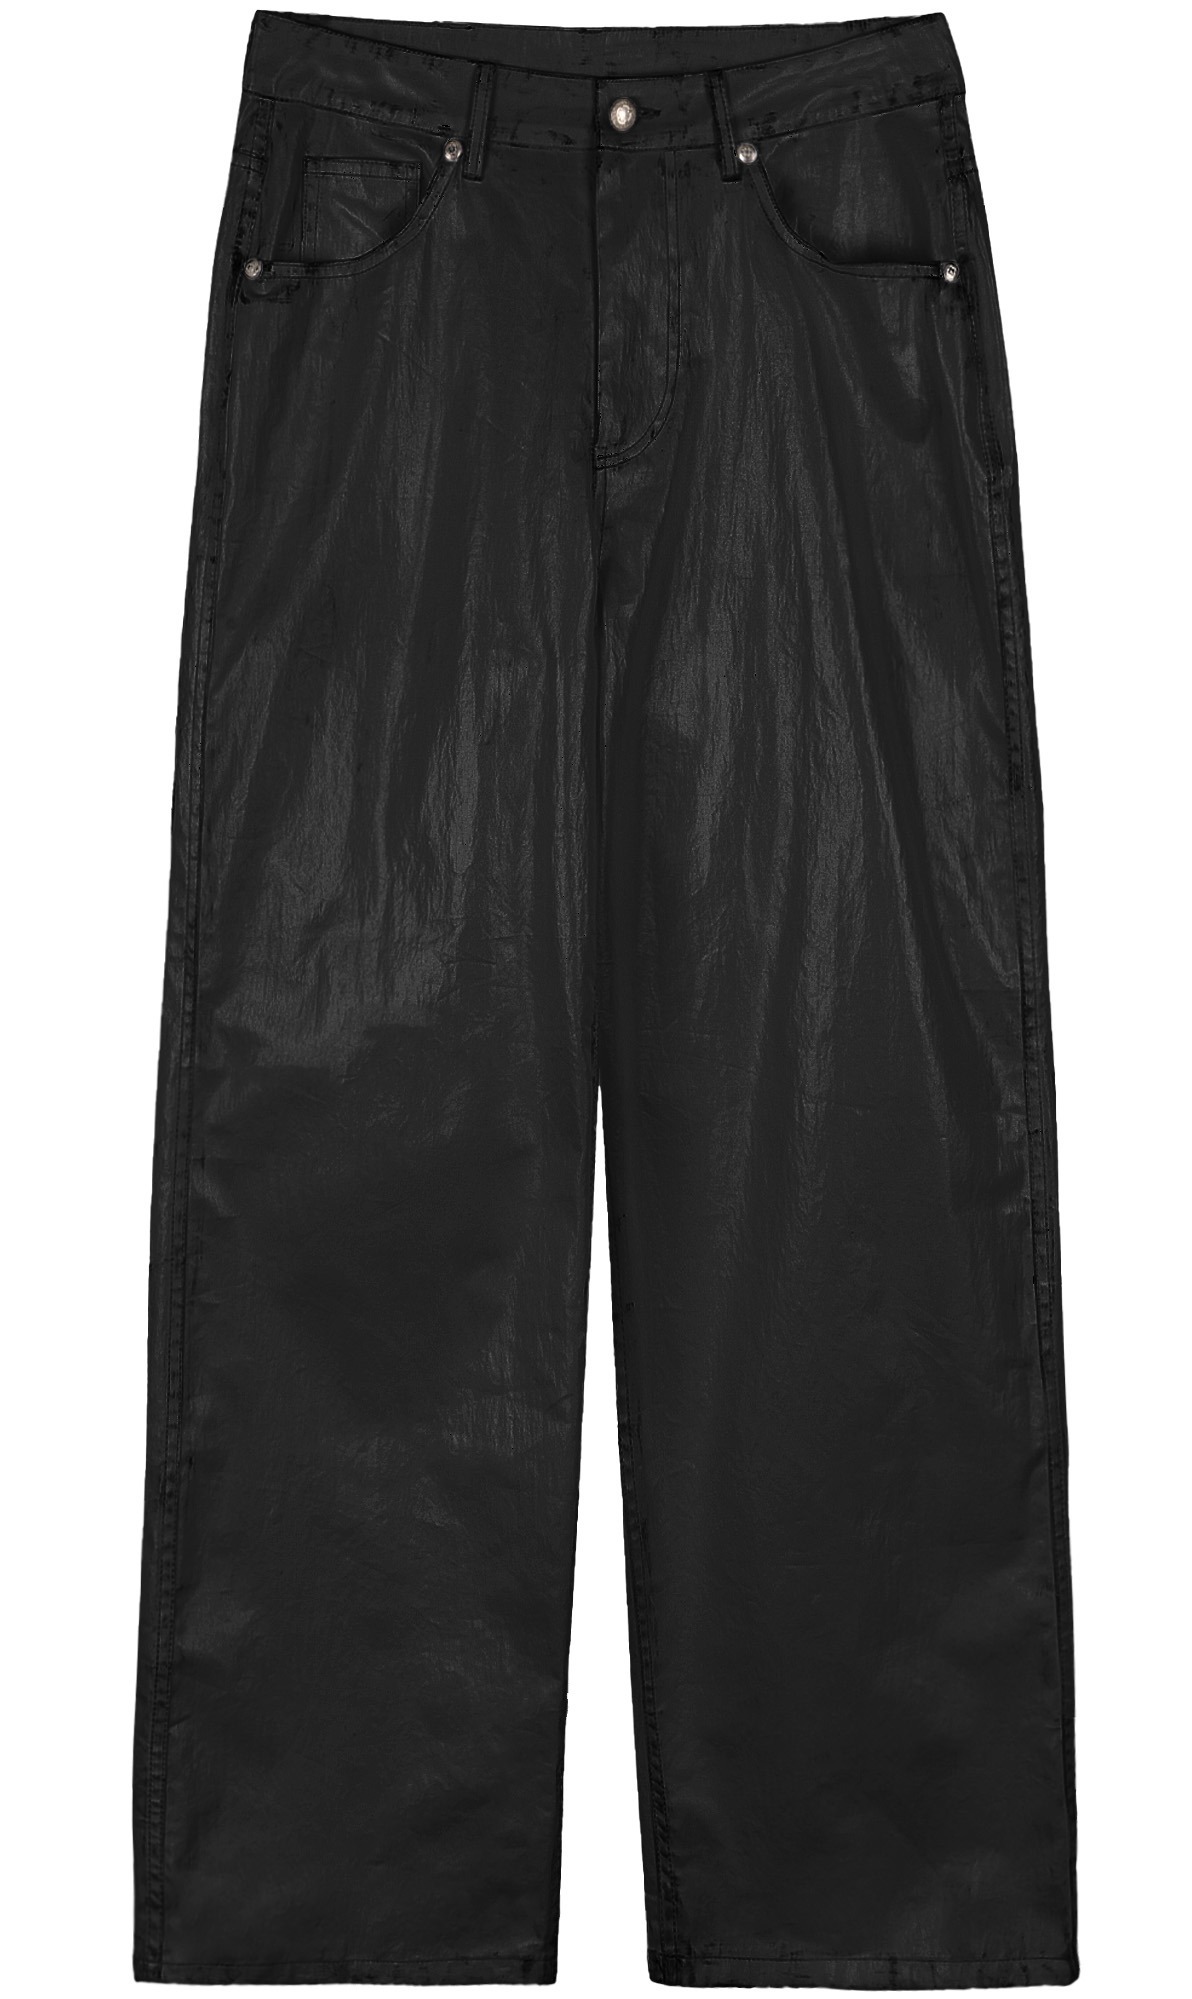 Graphic pants (Black)